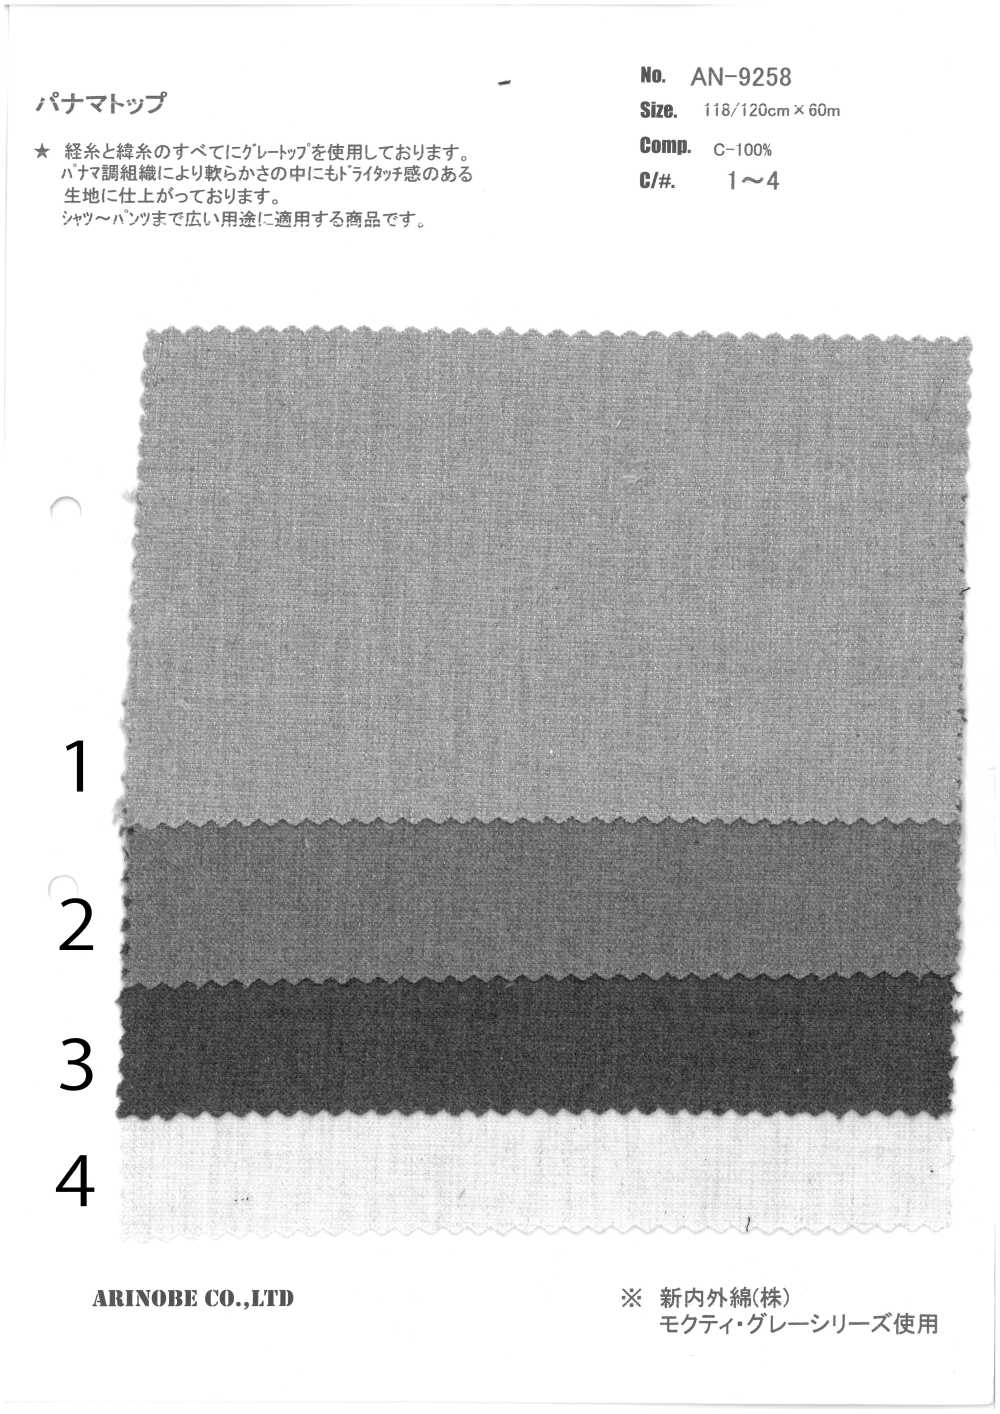 AN-9258 Panama Top[Textile / Fabric] ARINOBE CO., LTD.